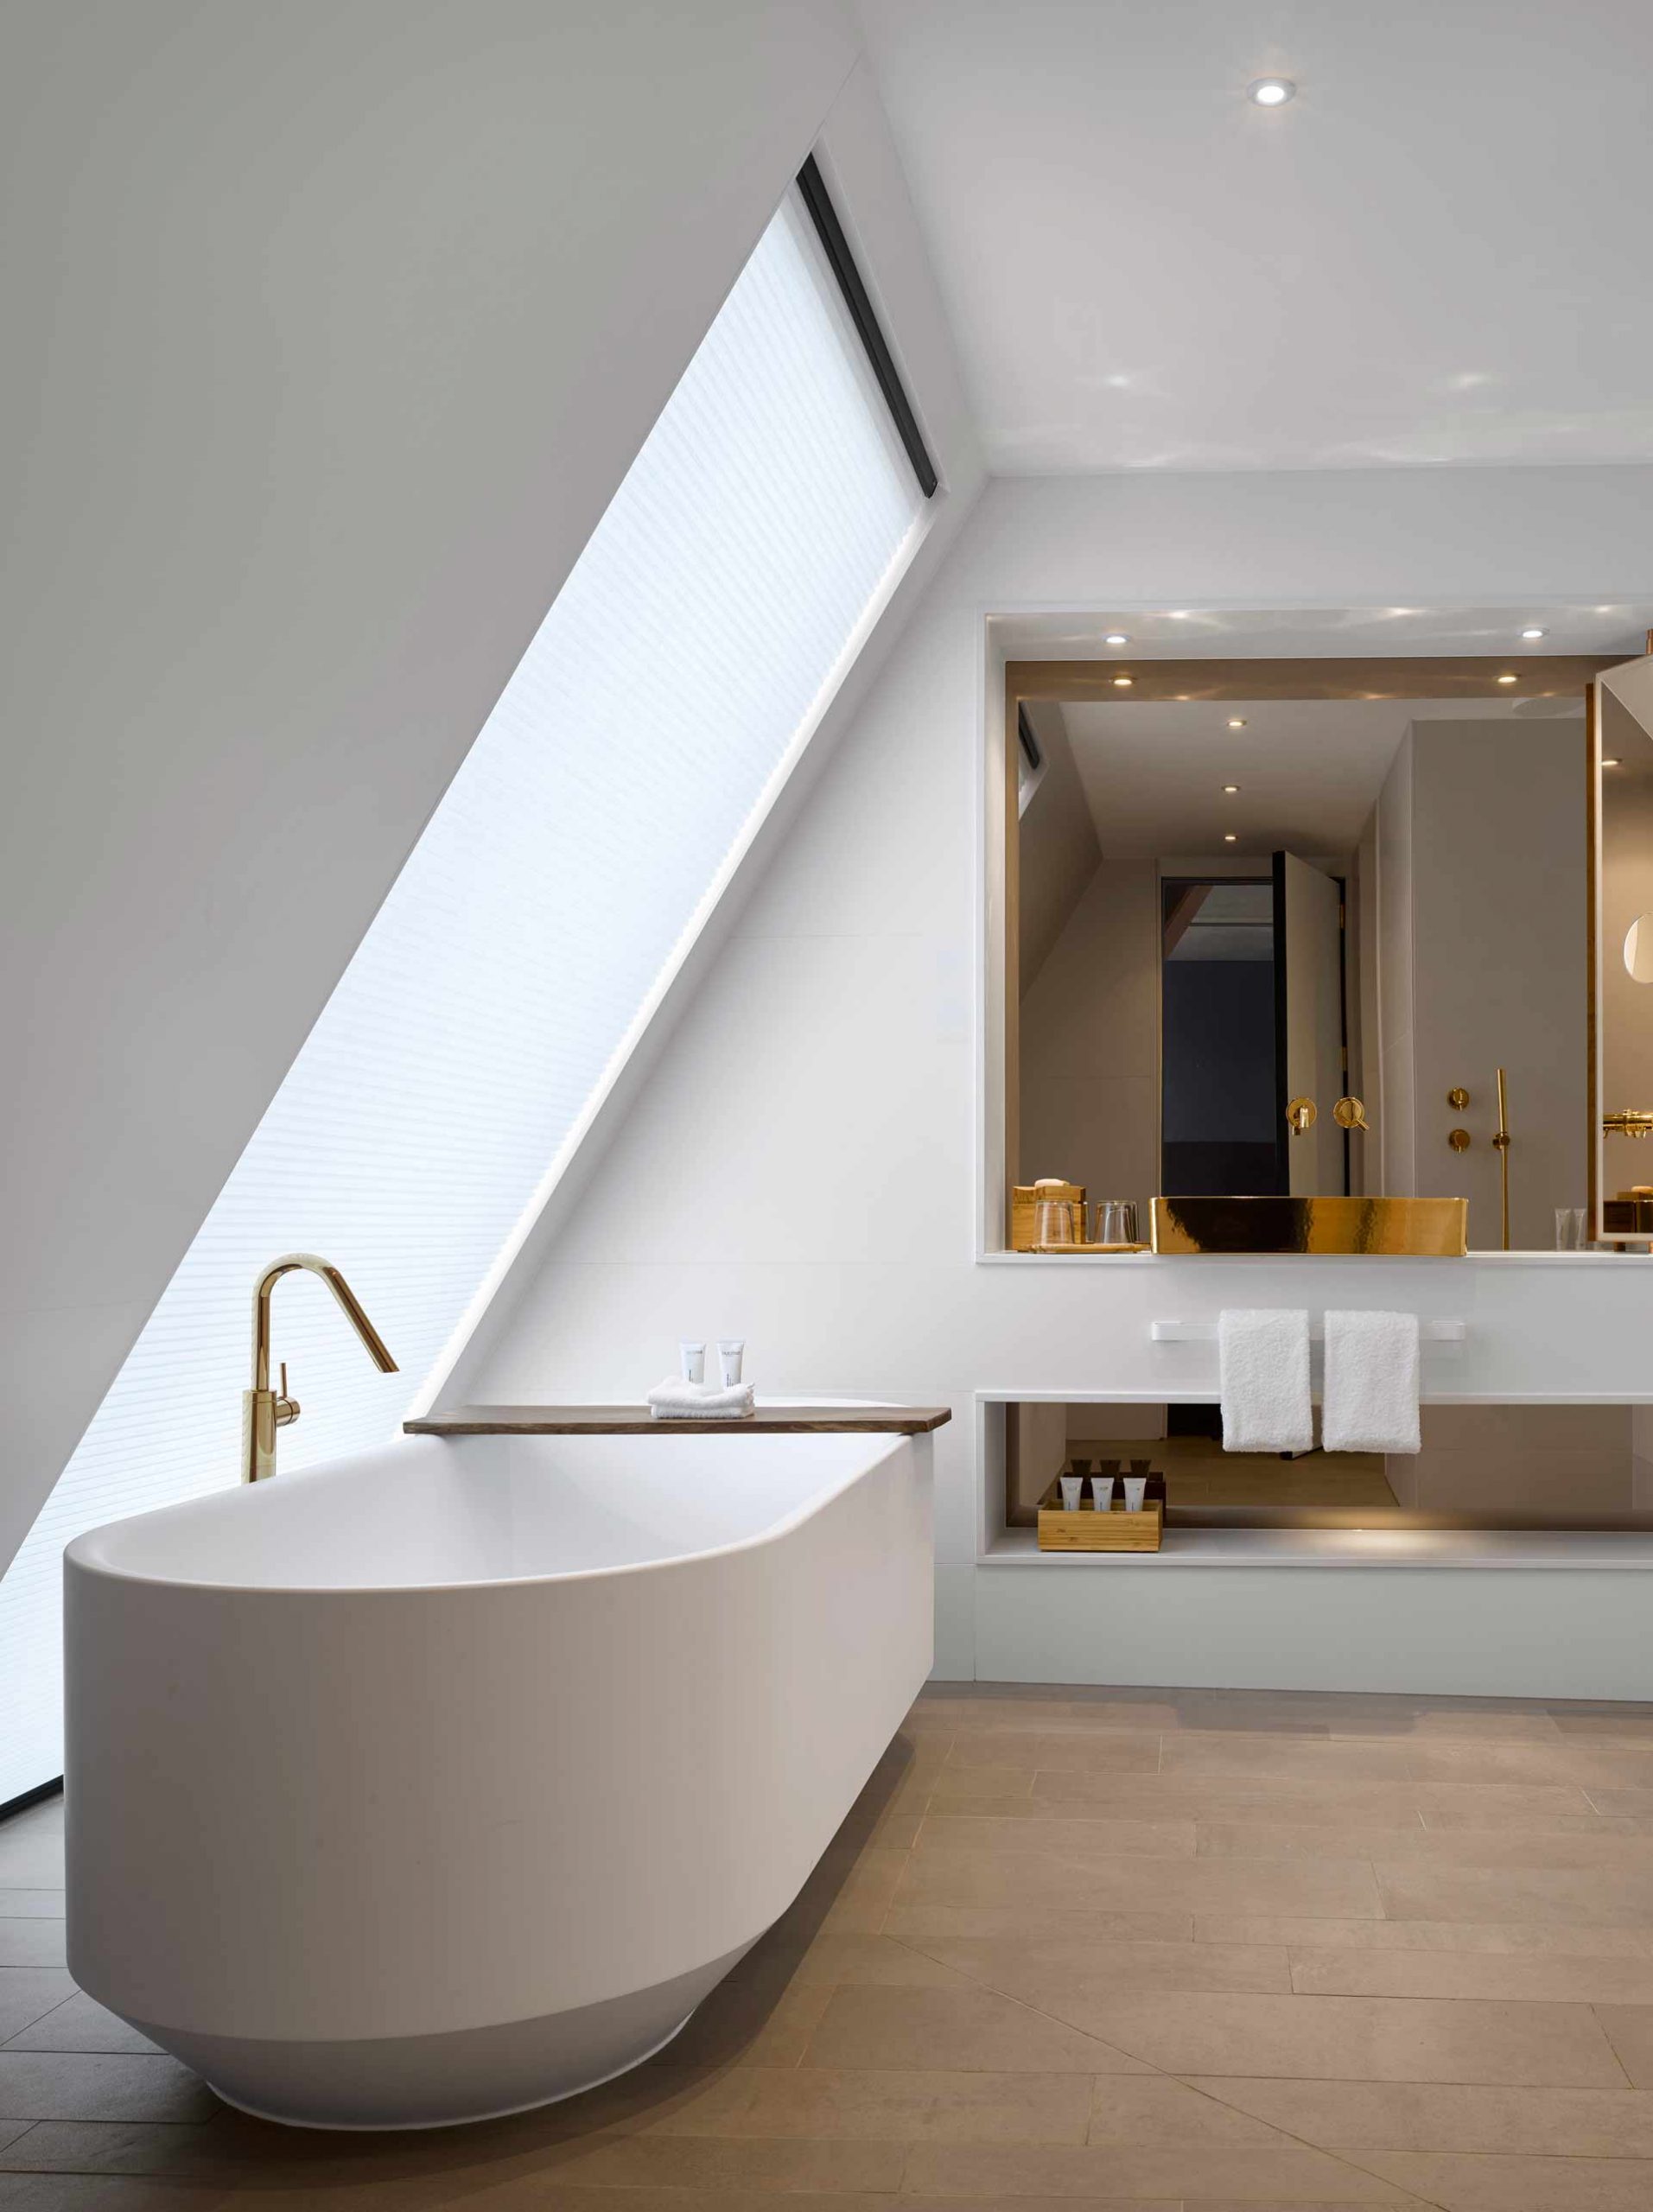 Will-Pryce-bathroom-nobu-interior-scaled-1